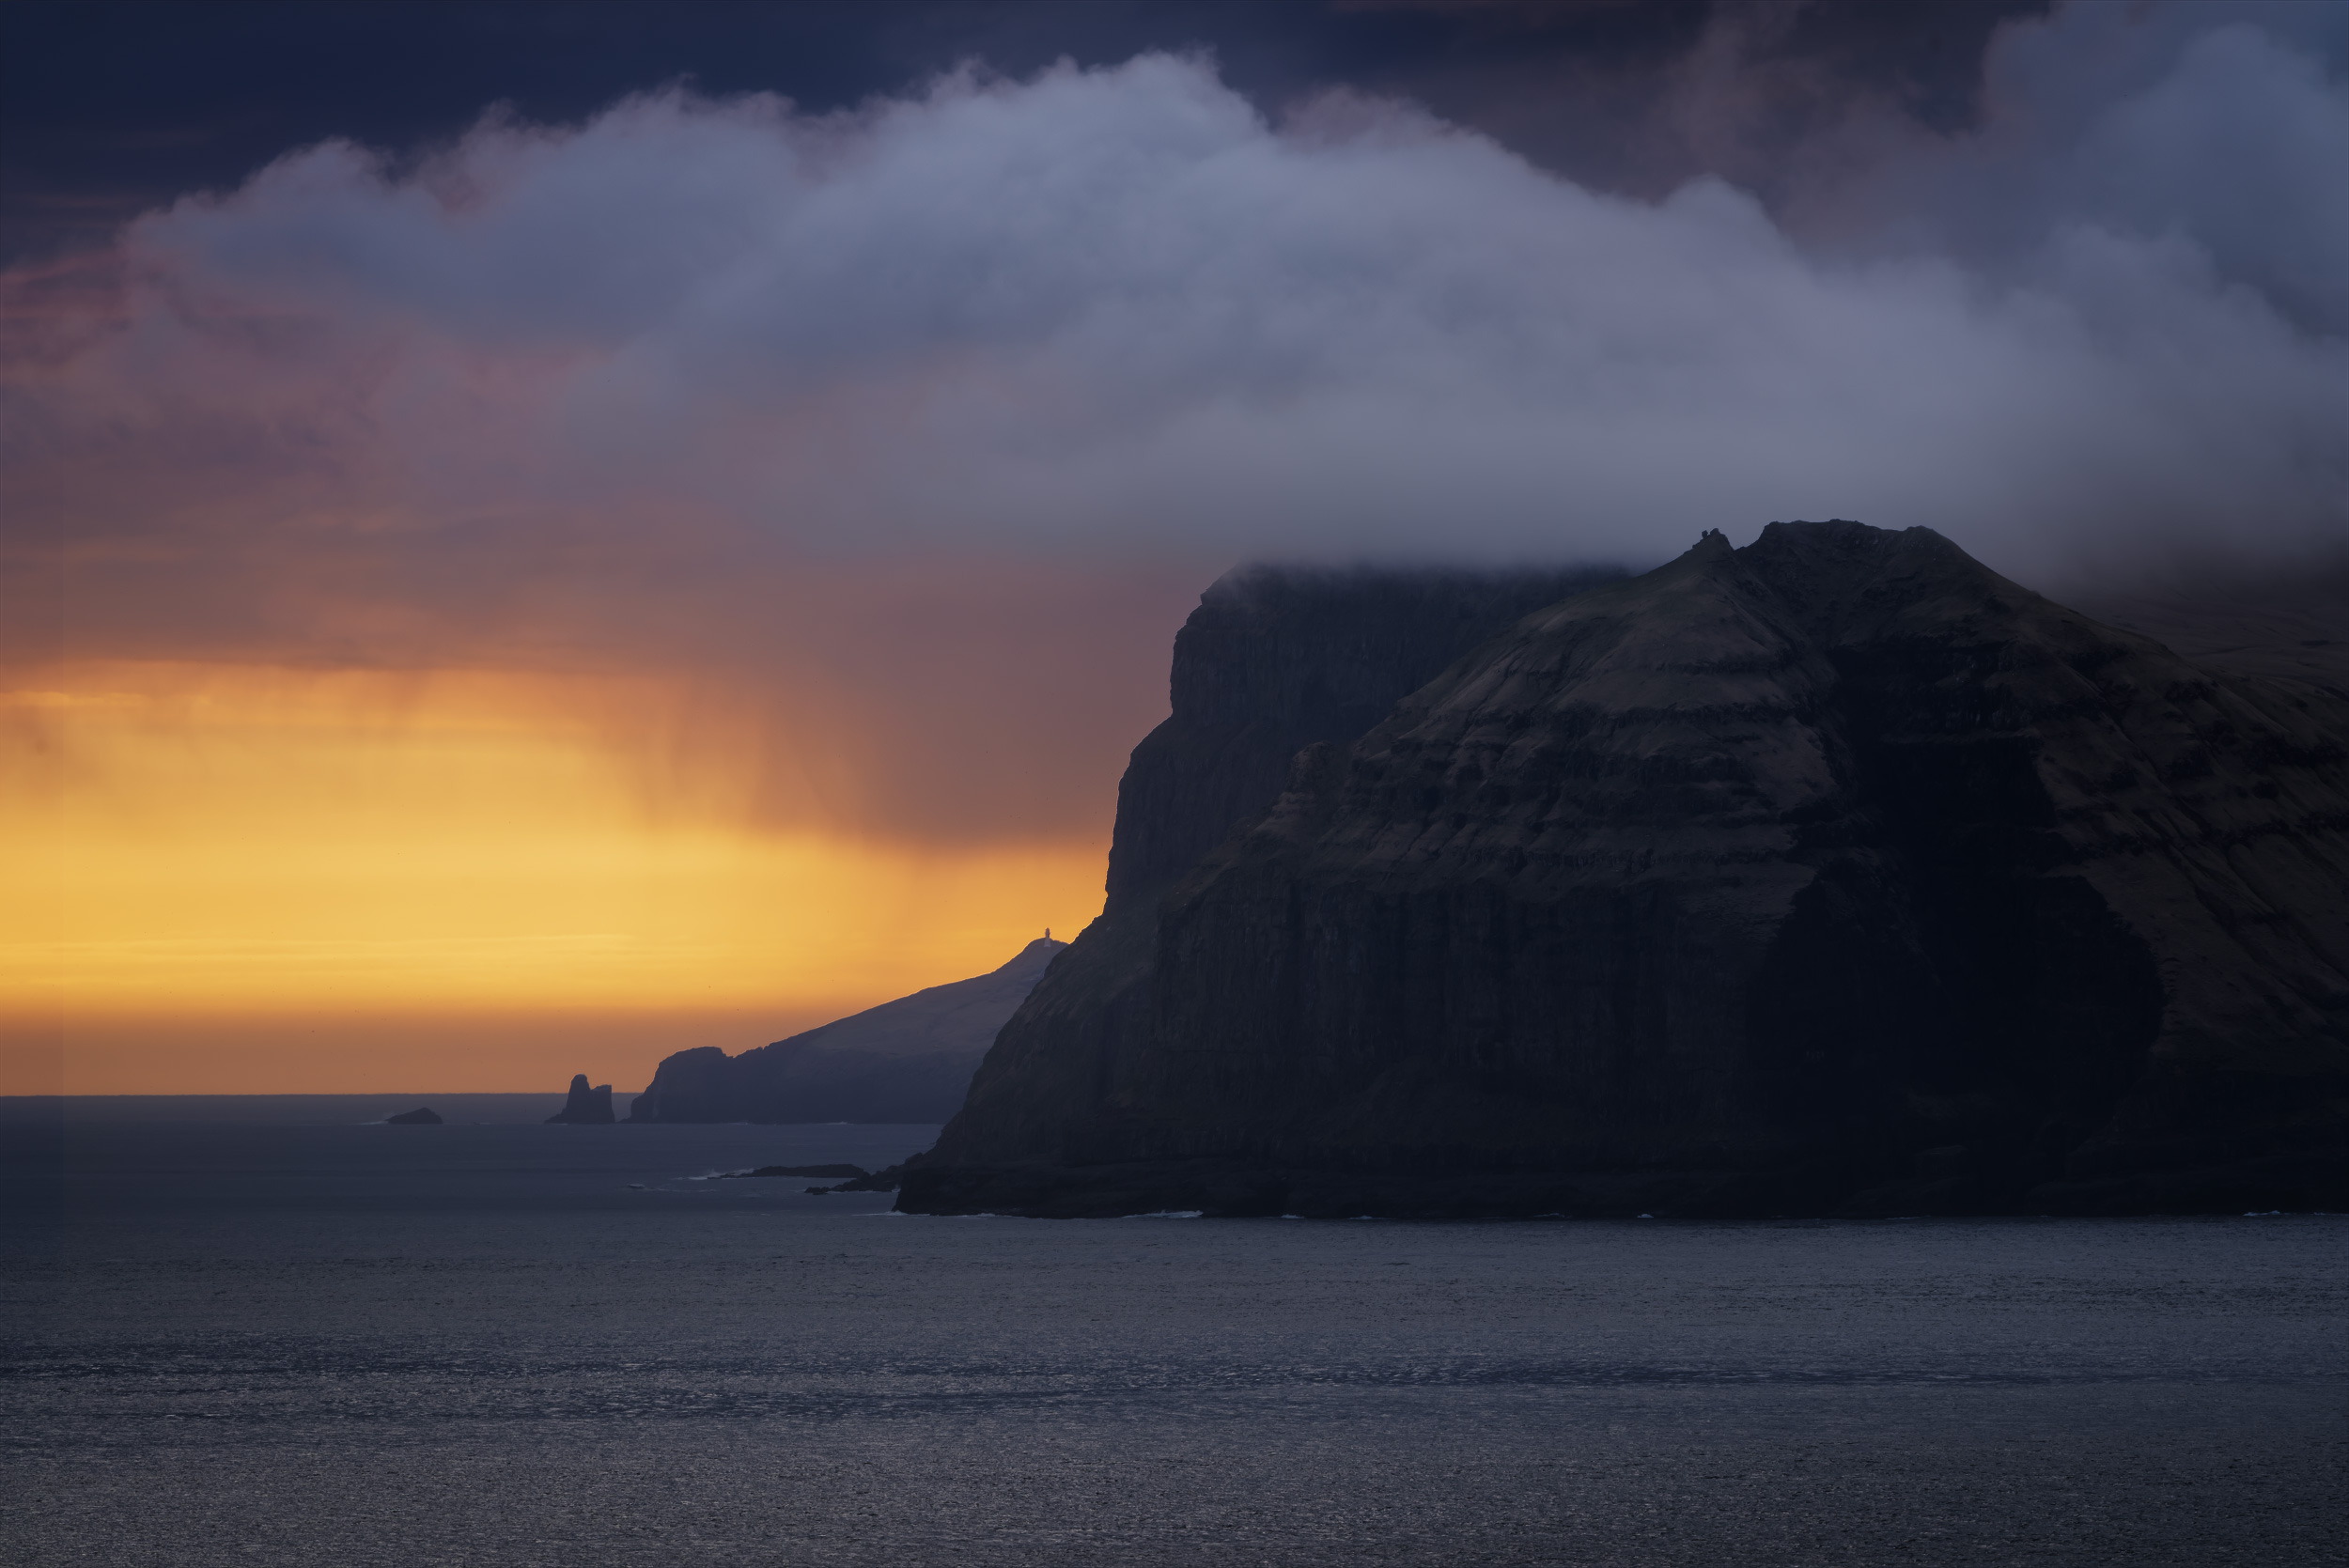 Sunset behind the island of Mykines in the Faroe Islands.